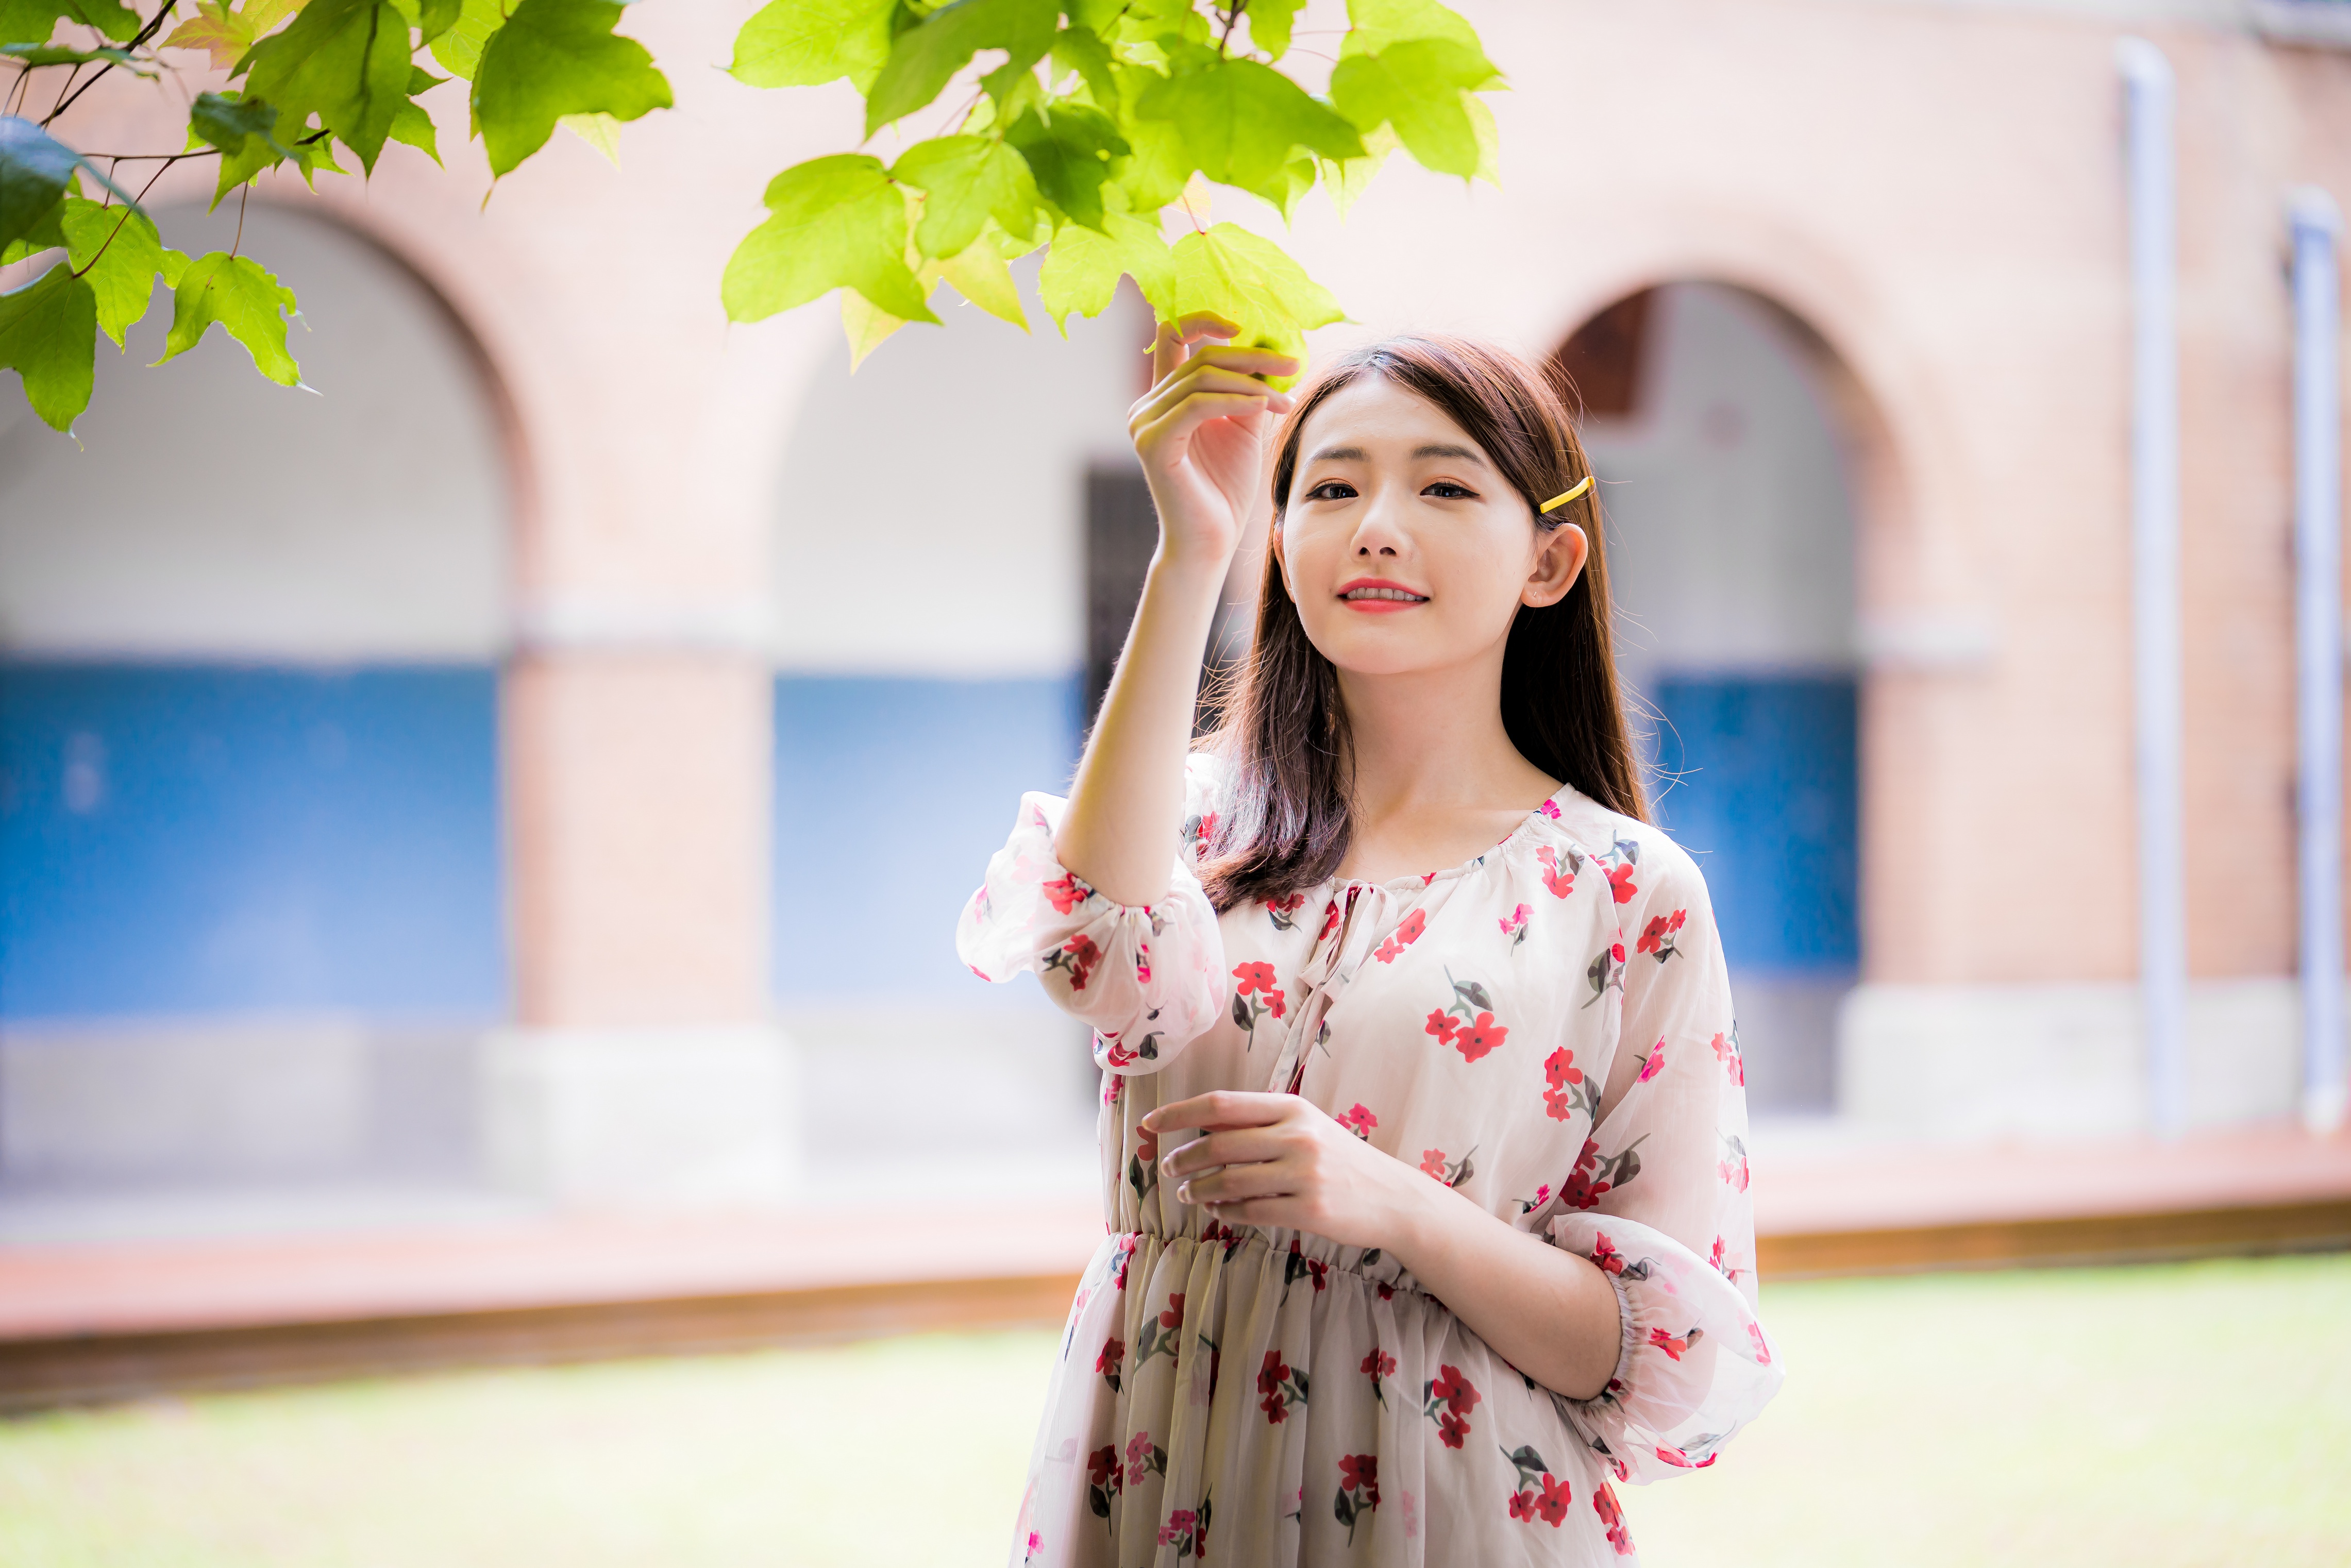 Asian Model Women Long Hair Brunette Depth Of Field Building Leaves Flower Dress Looking At Viewer H 4562x3043